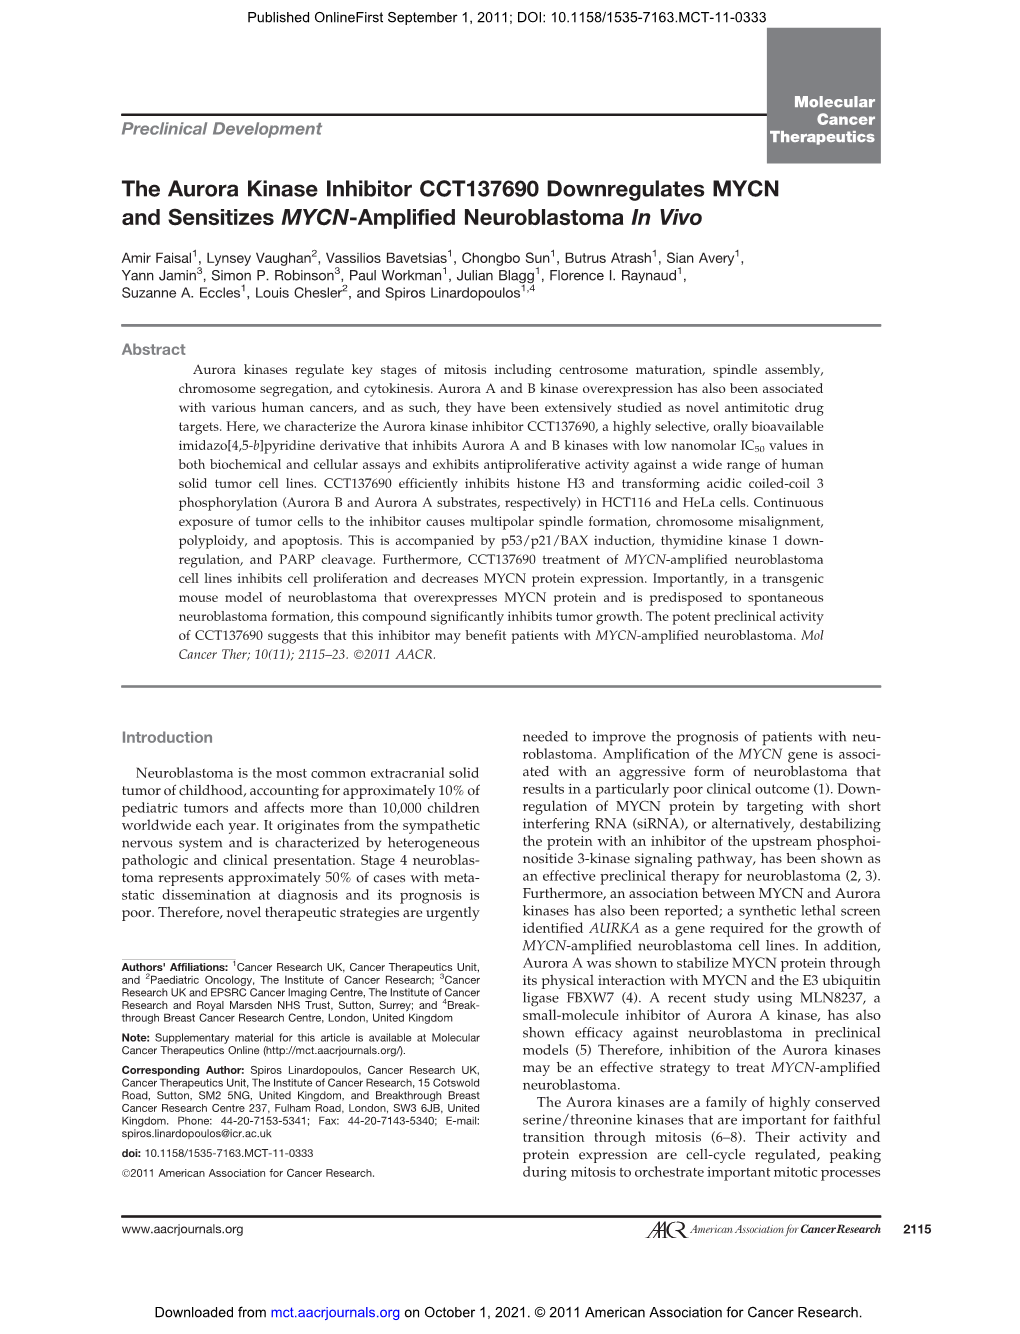 The Aurora Kinase Inhibitor CCT137690 Downregulates MYCN and Sensitizes MYCN-Amplified Neuroblastoma in Vivo